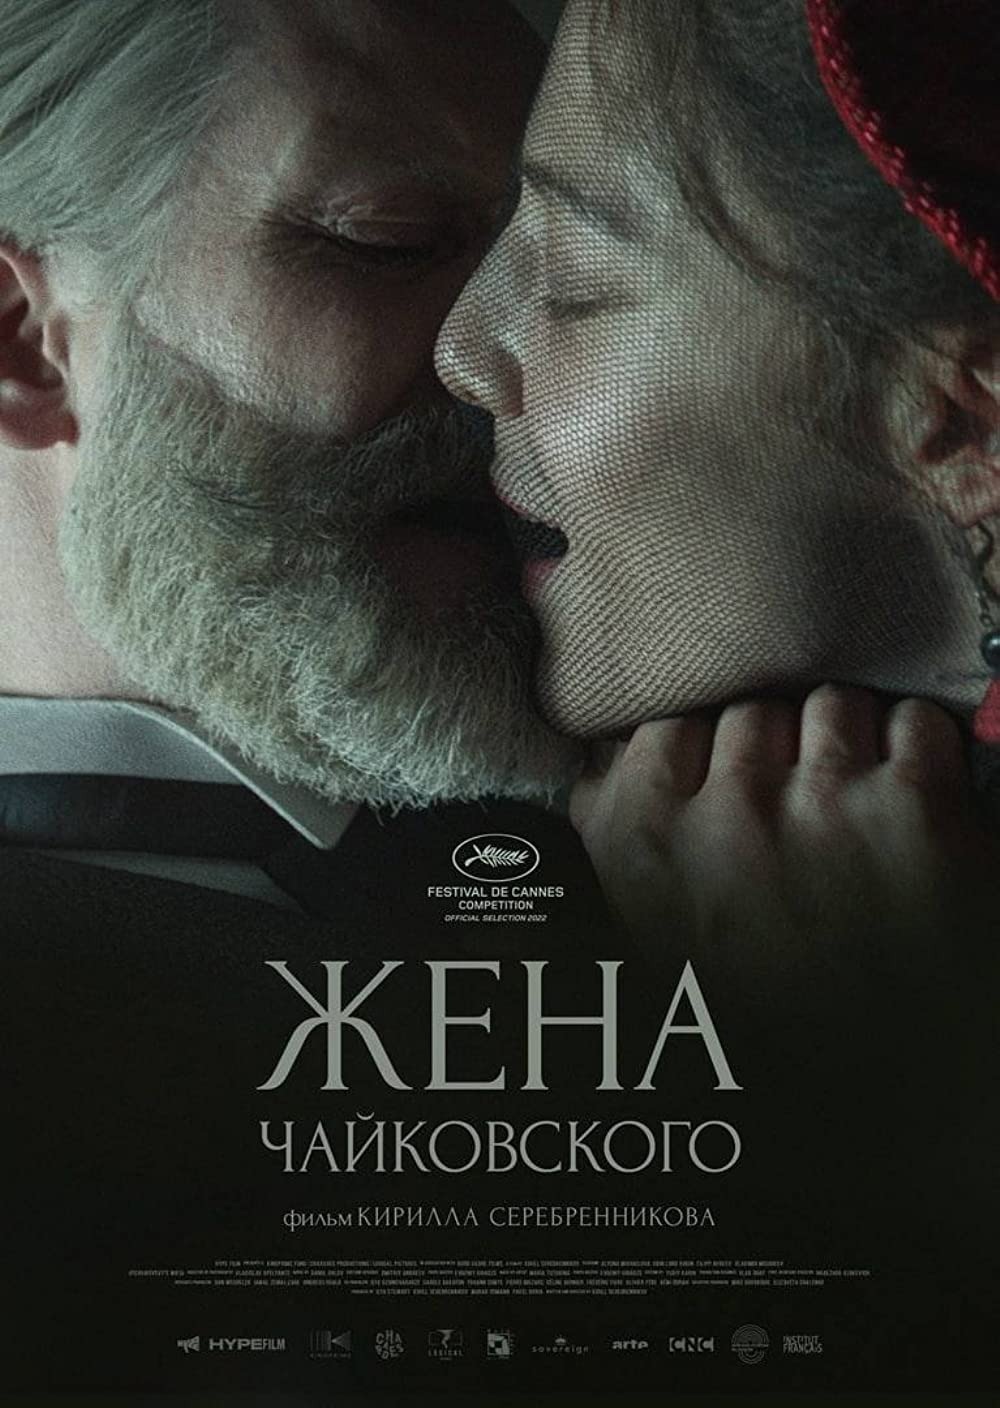 Extra Large Movie Poster Image for Zhena Chaikovskogo (#2 of 3)